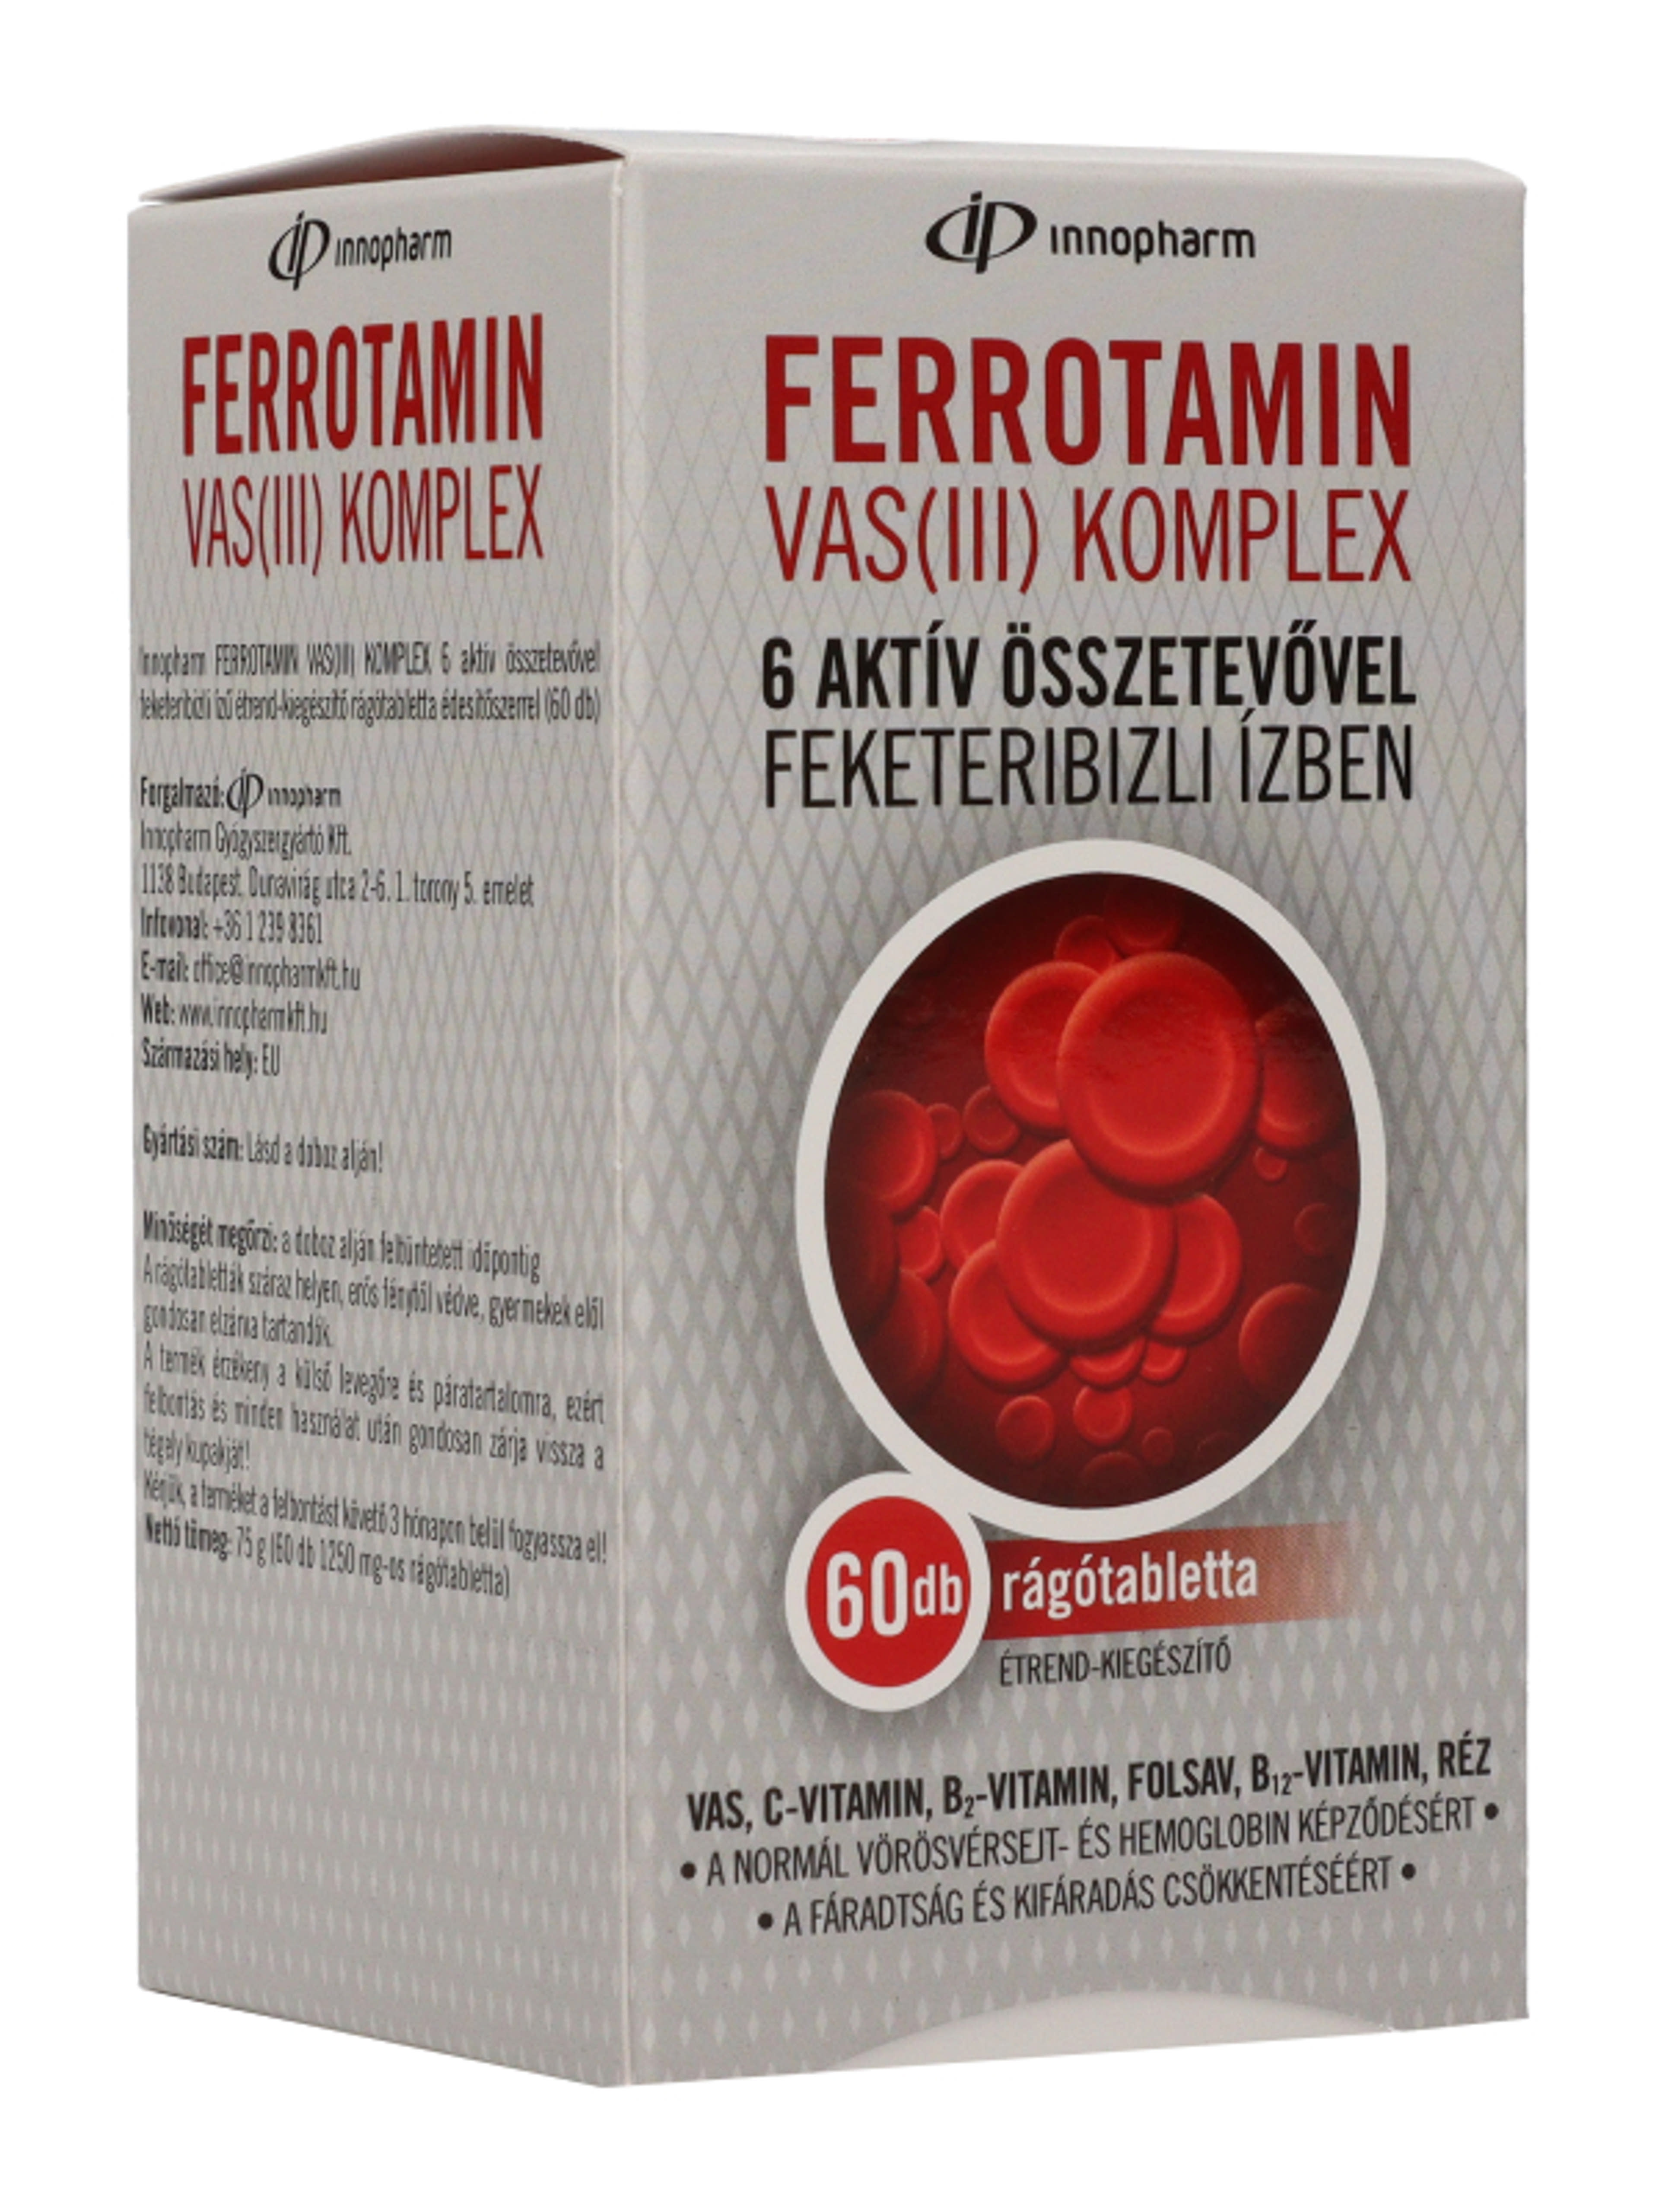 Innopharm ferrotamin vas komplex rágó tabletta - 60 db-5